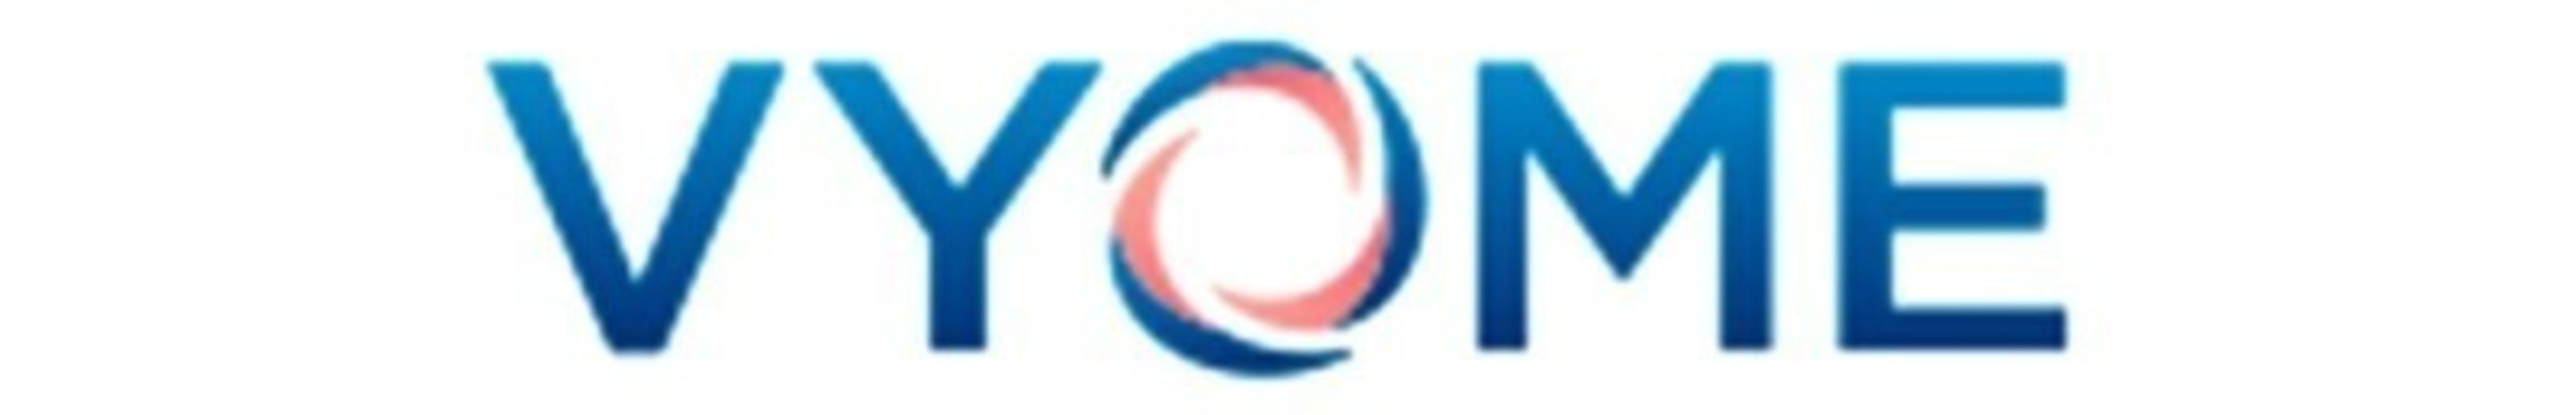 Vyome Biosciences logo